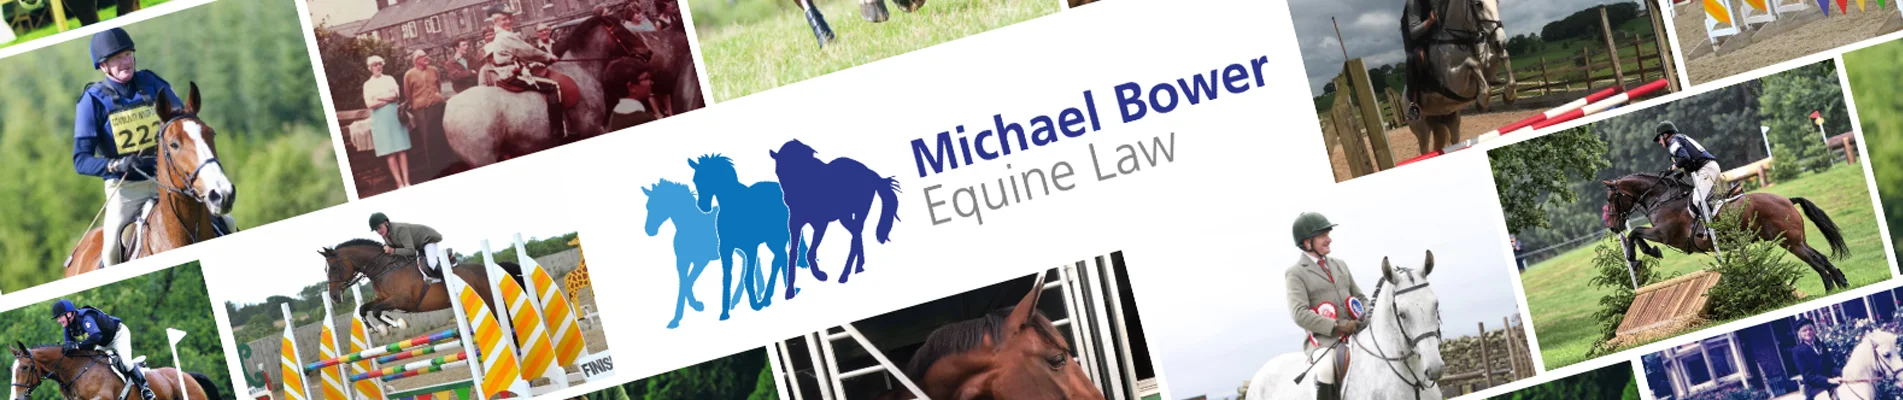 Michael Bower Equine law